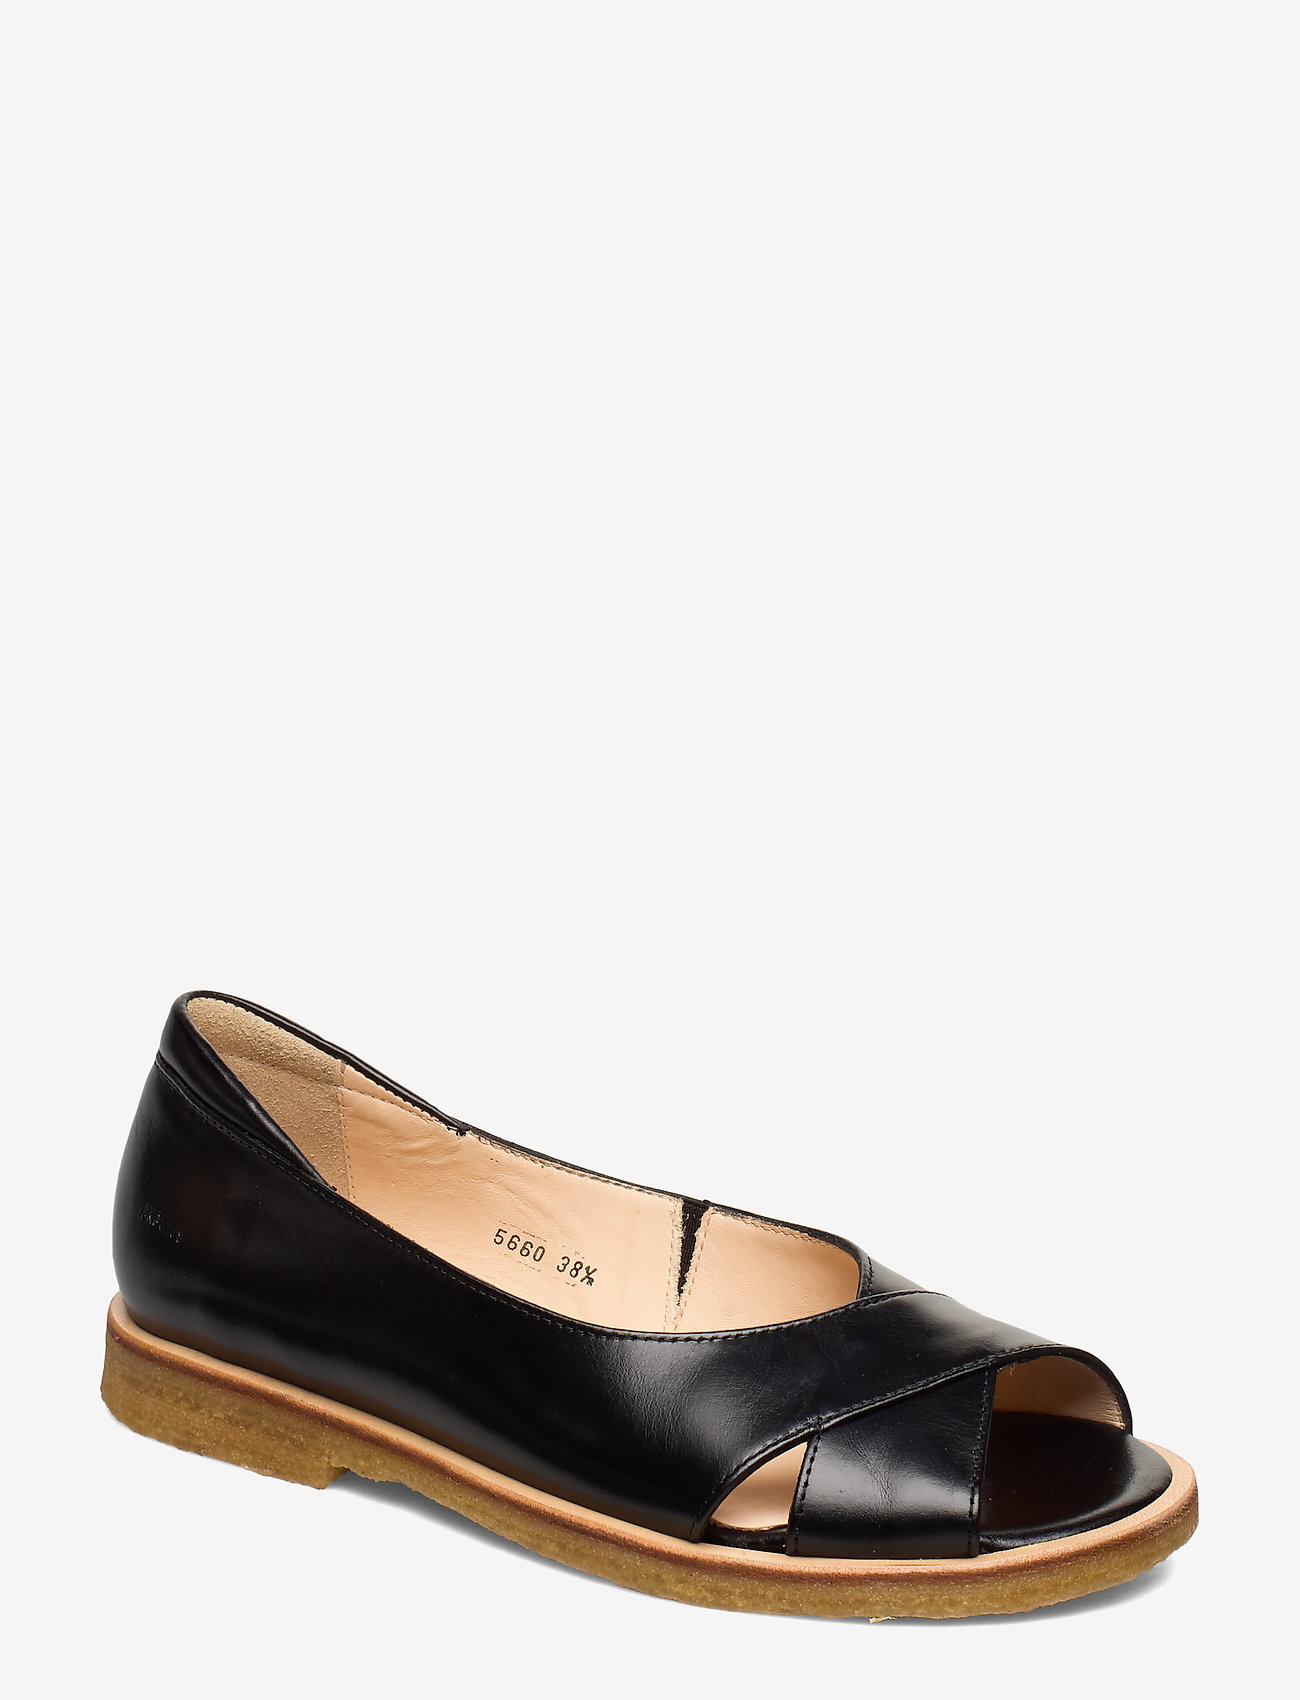 ANGULUS - Sandals - flat - open toe - clo - flache sandalen - 1835/001 black/black - 0